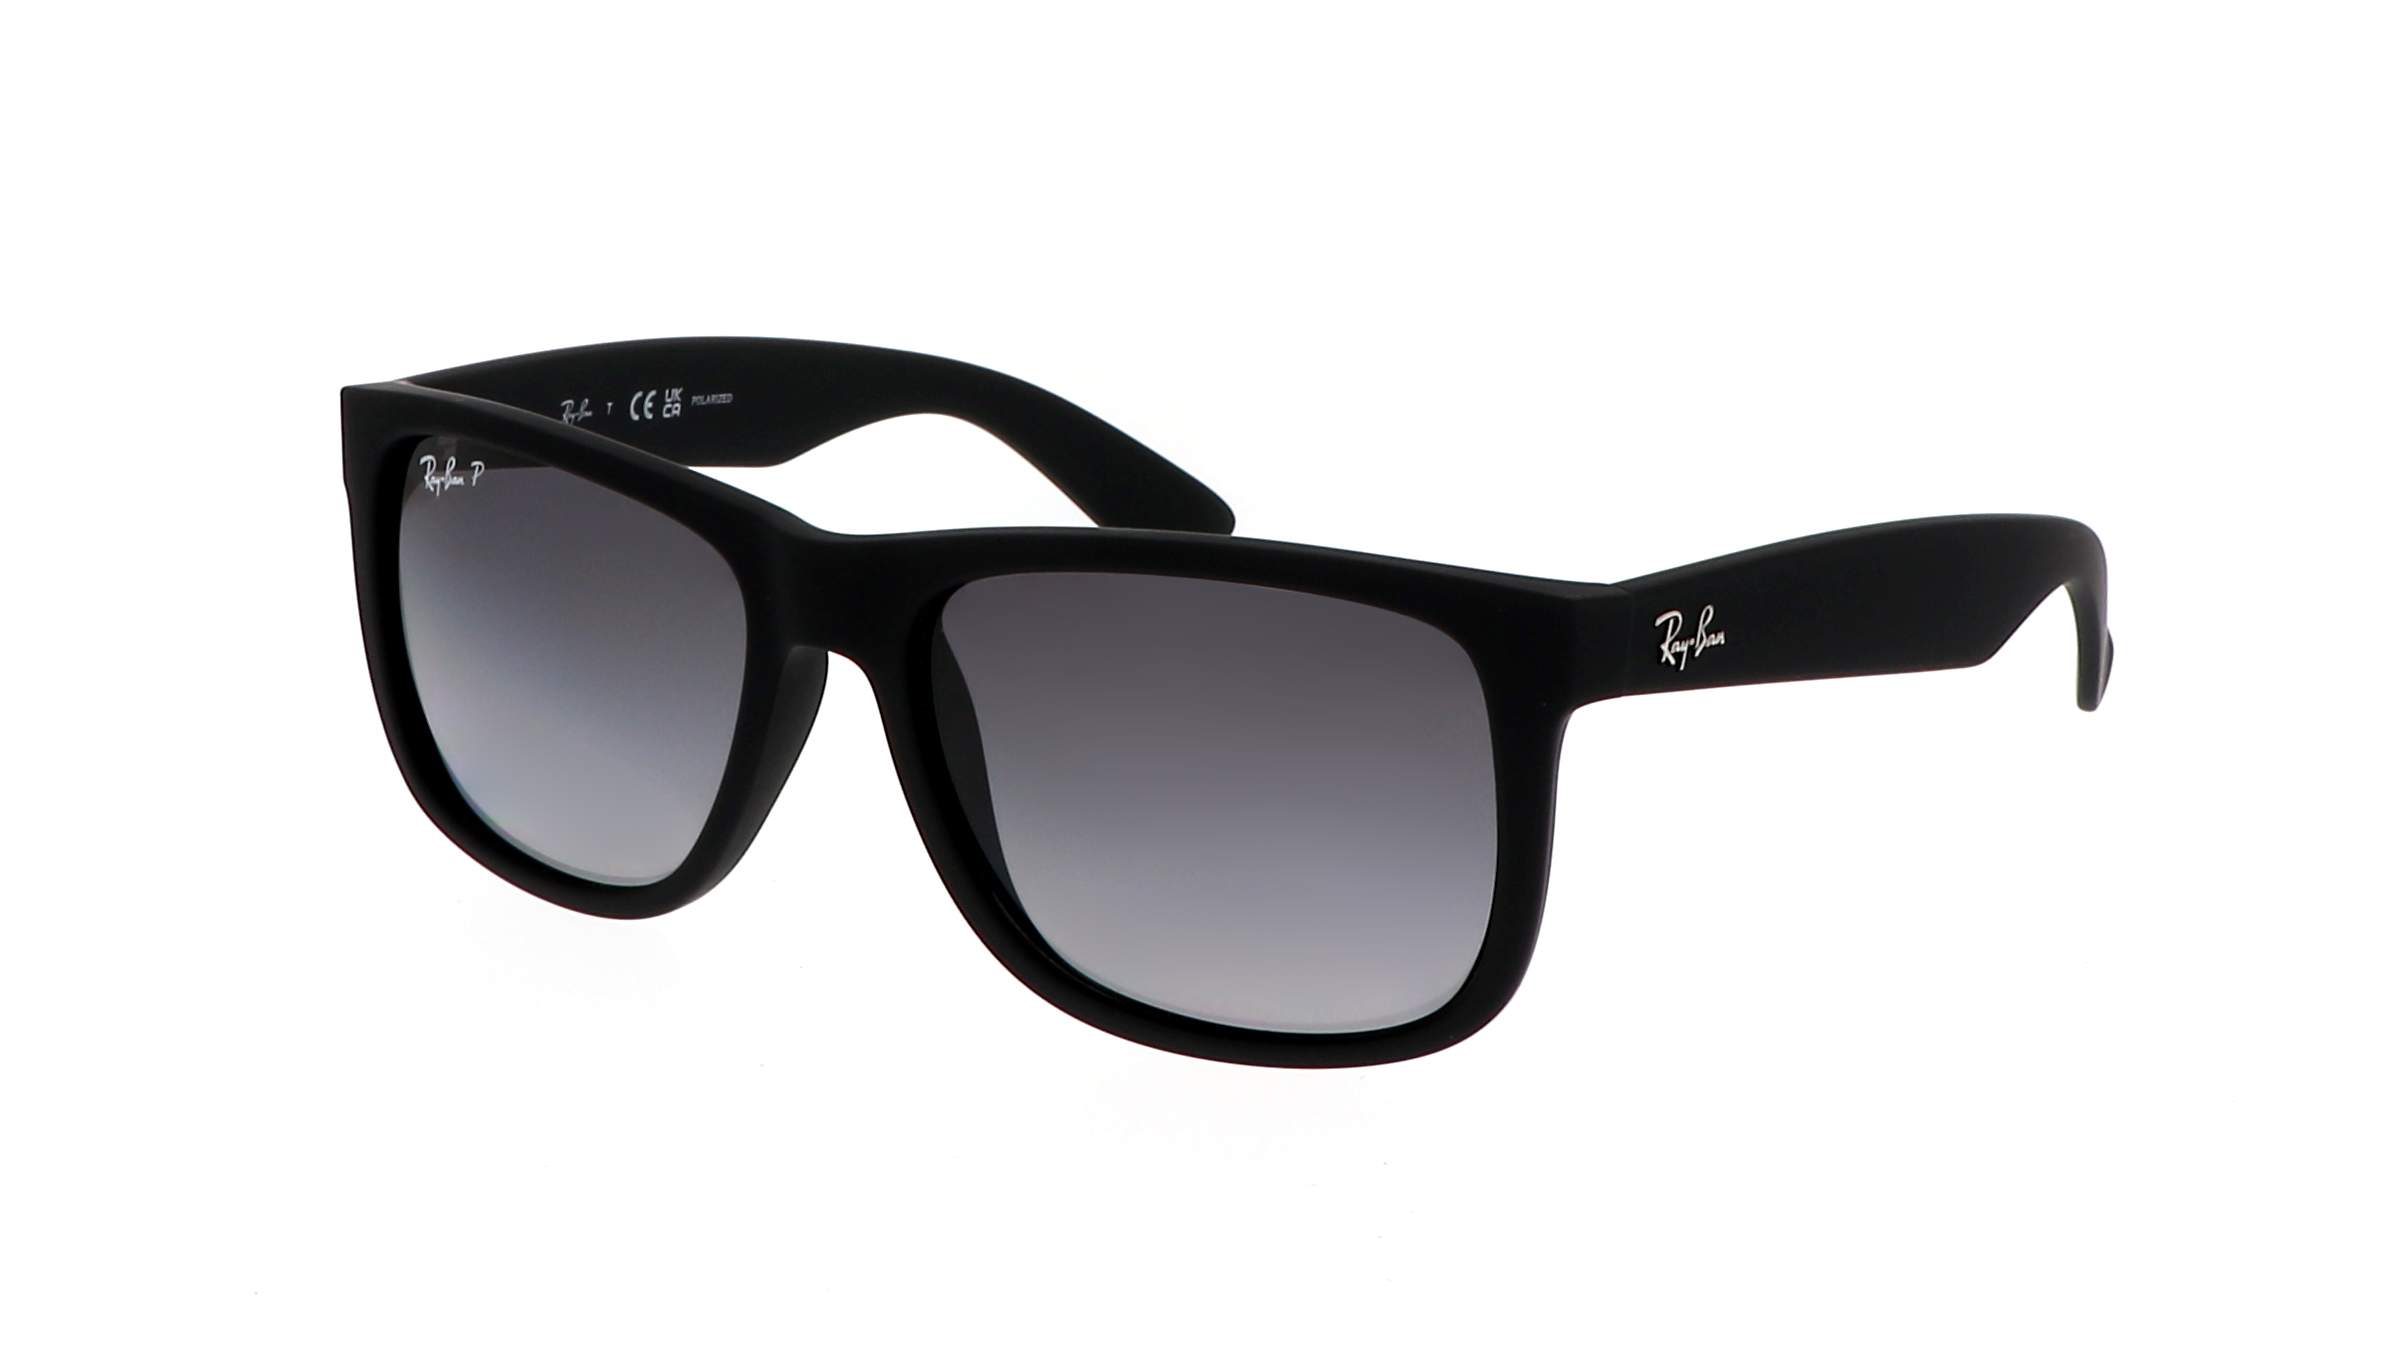 Sunglasses Ray-Ban Justin Black RB4165 622/T3 54-16 Polarized Gradient ...